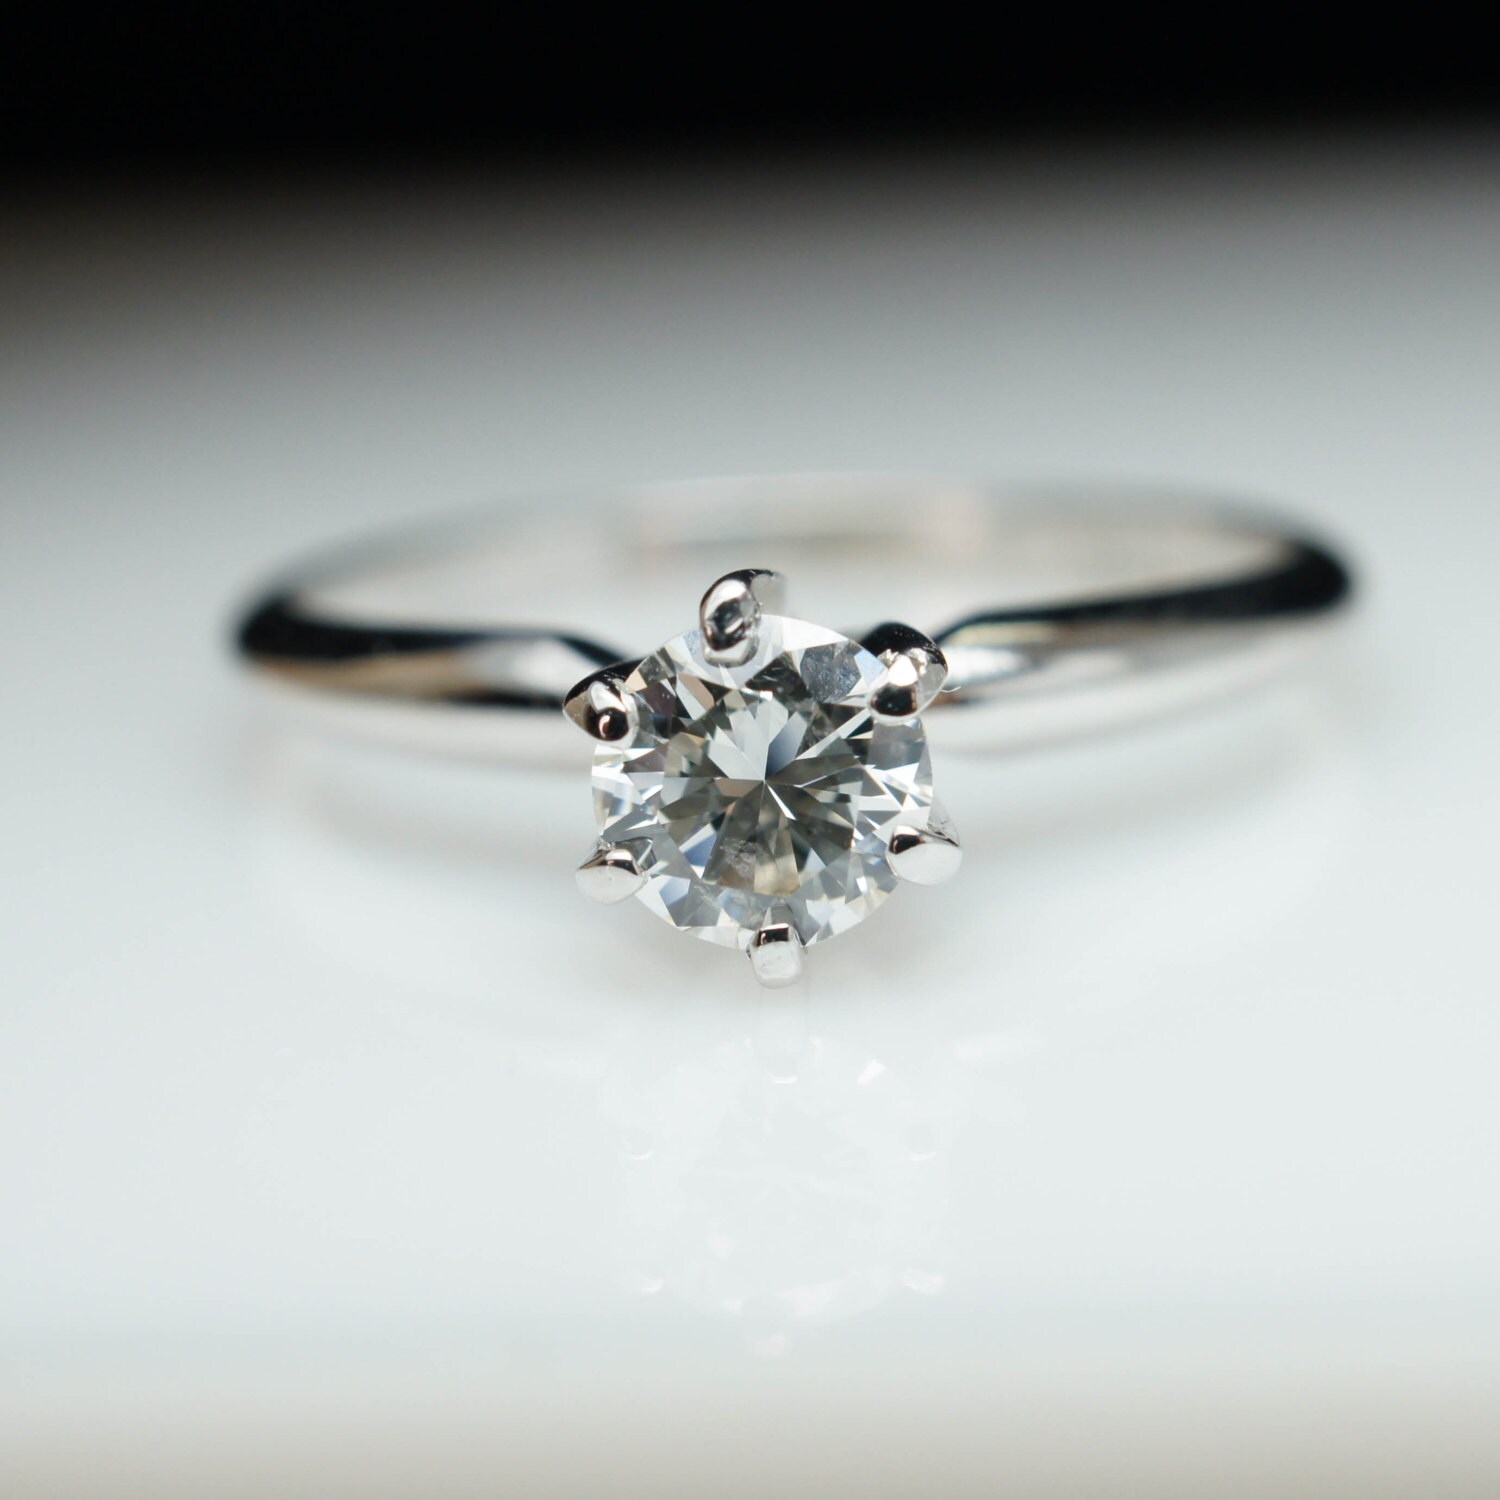 SALE Vintage Solitaire .38ct Round Diamond Engagement Ring